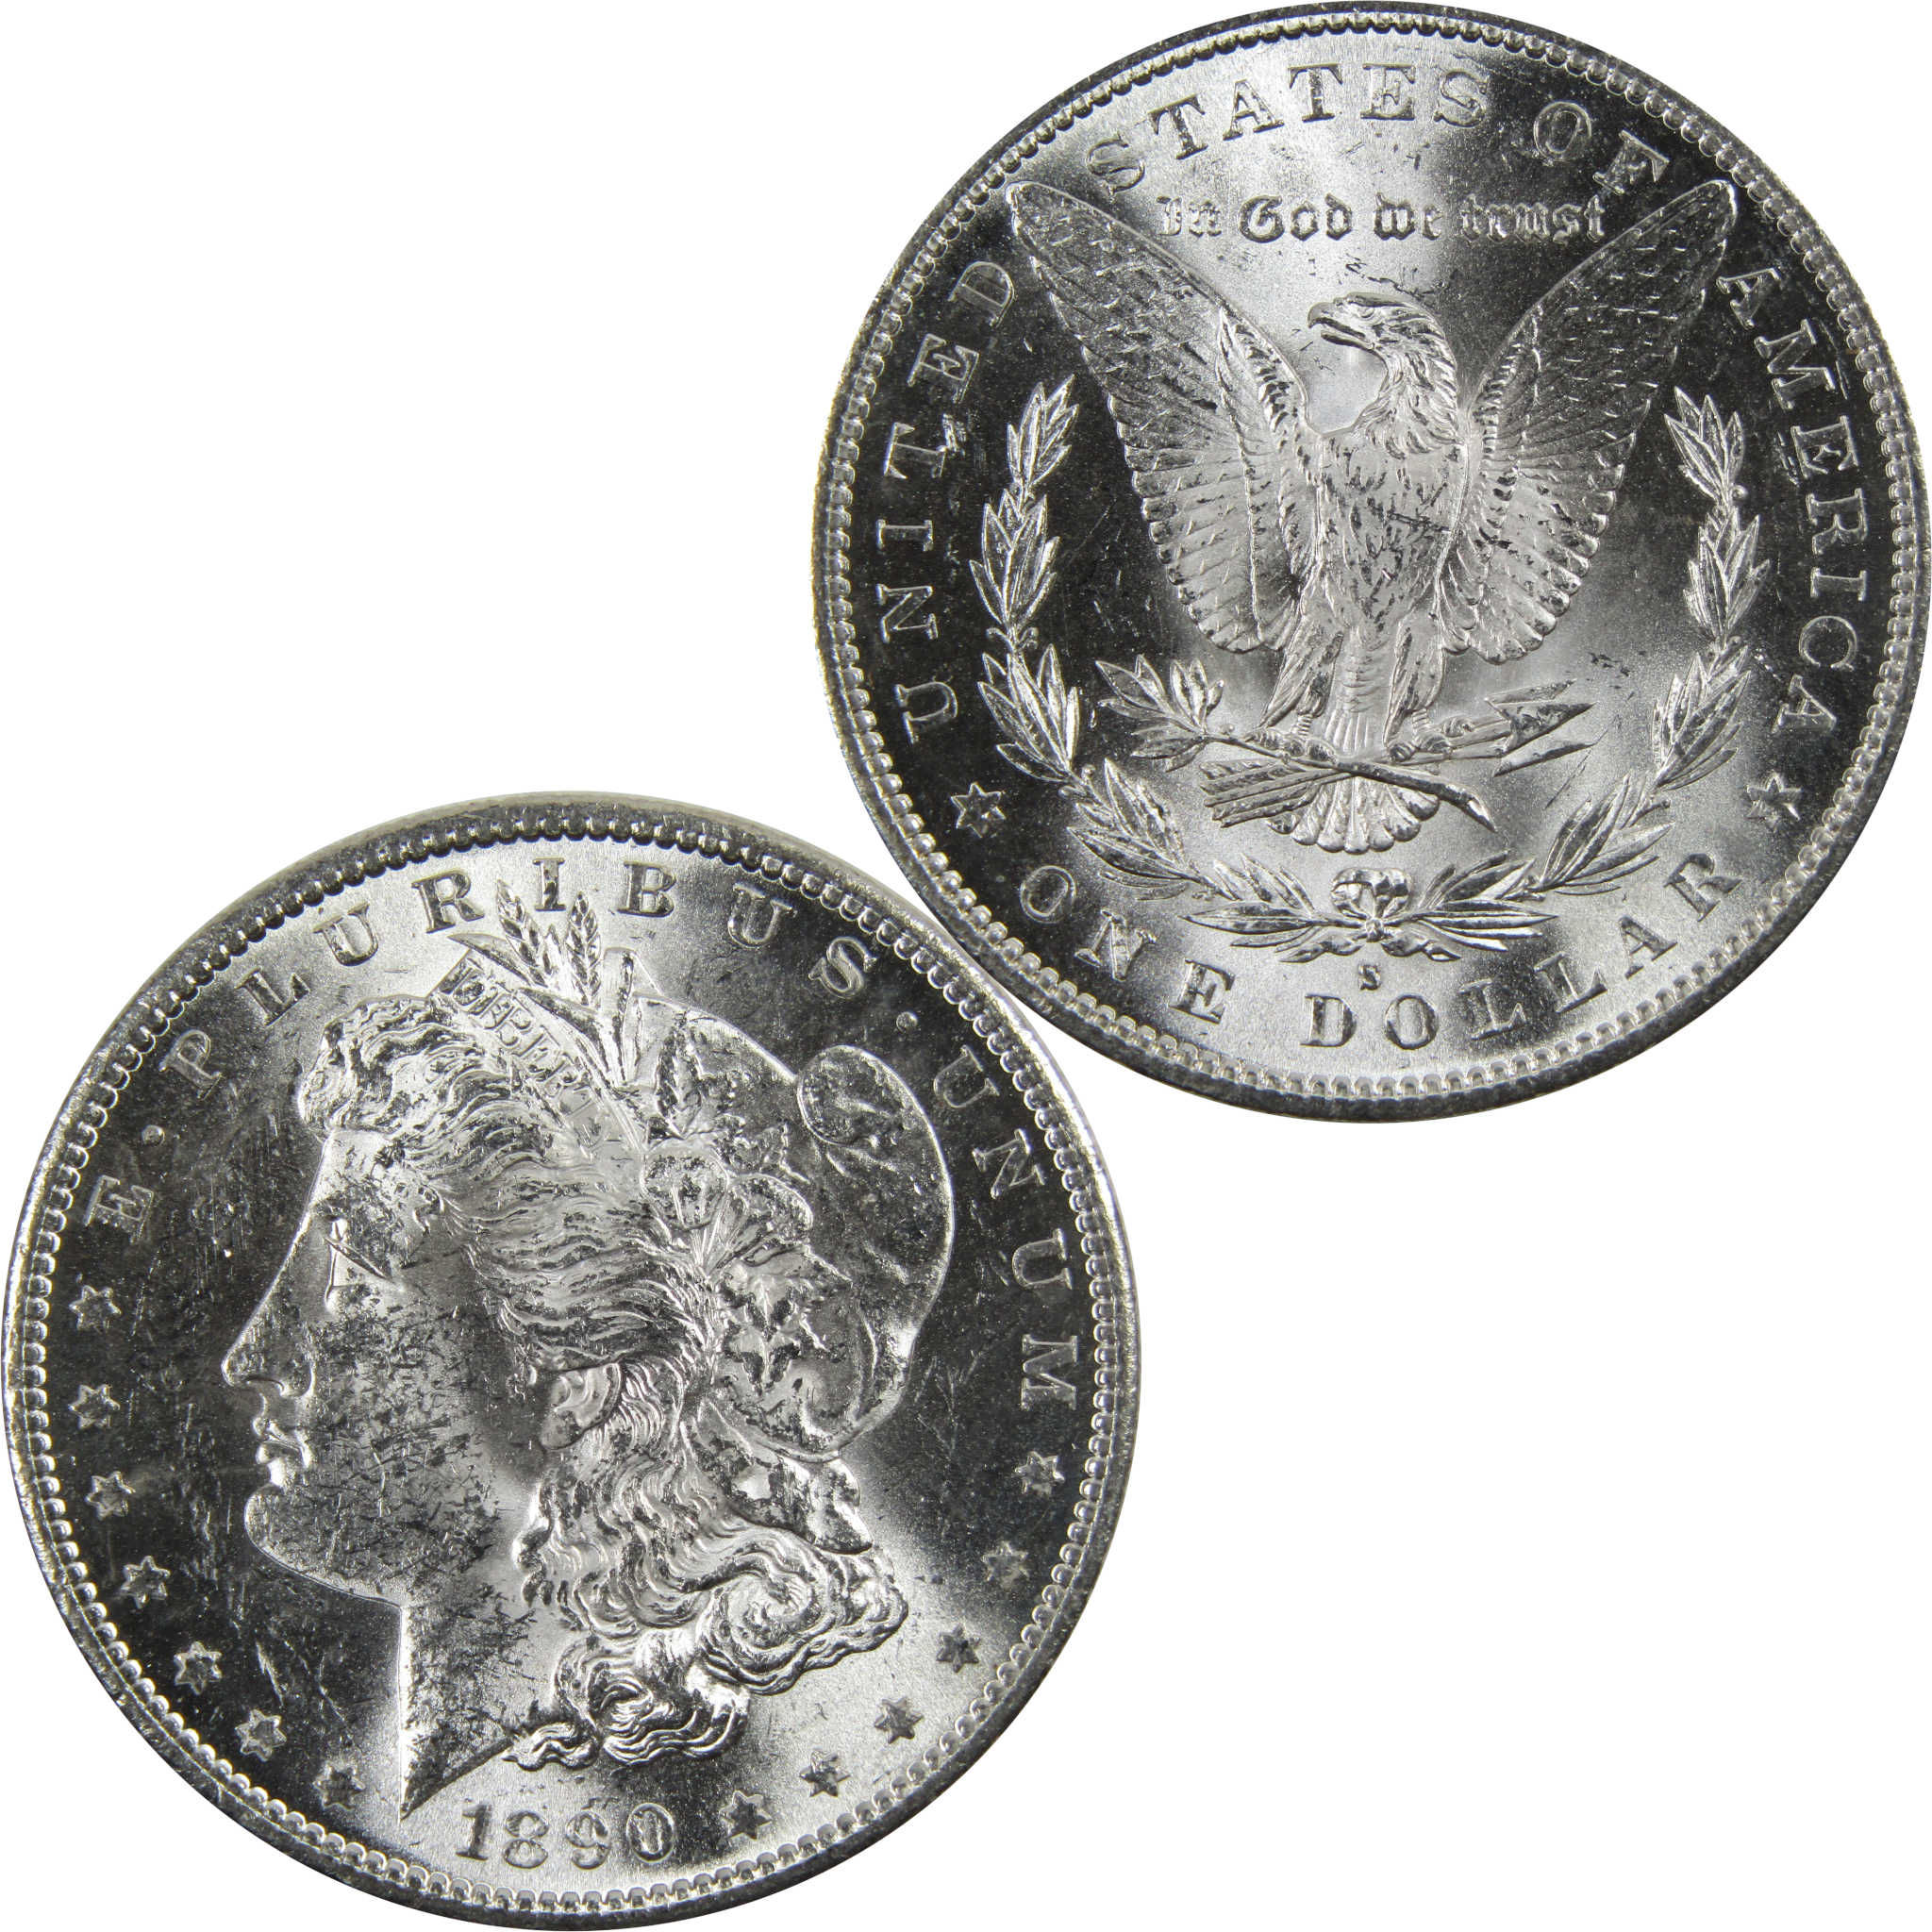 1890 S Morgan Dollar BU Uncirculated 90% Silver $1 Coin SKU:I4922 - Morgan coin - Morgan silver dollar - Morgan silver dollar for sale - Profile Coins &amp; Collectibles